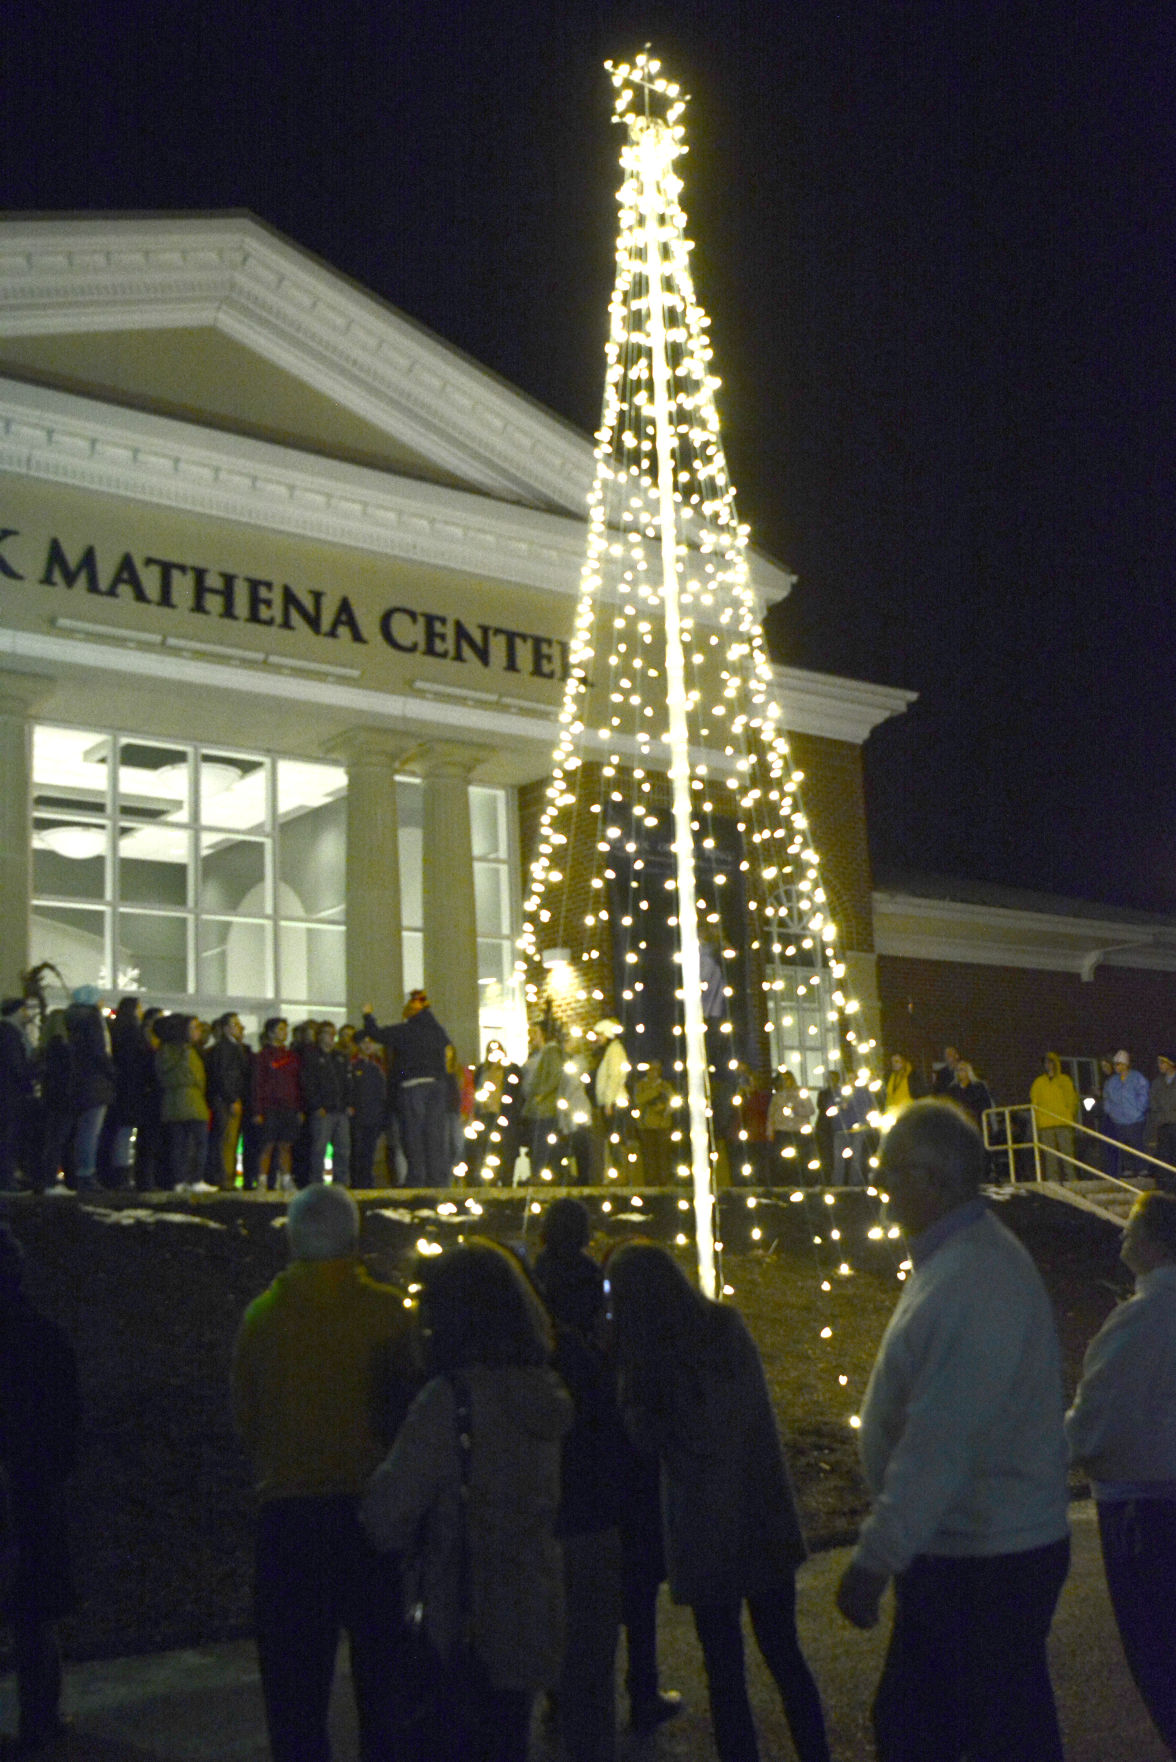 Second annual Christmas tree lighting illuminates night sky in